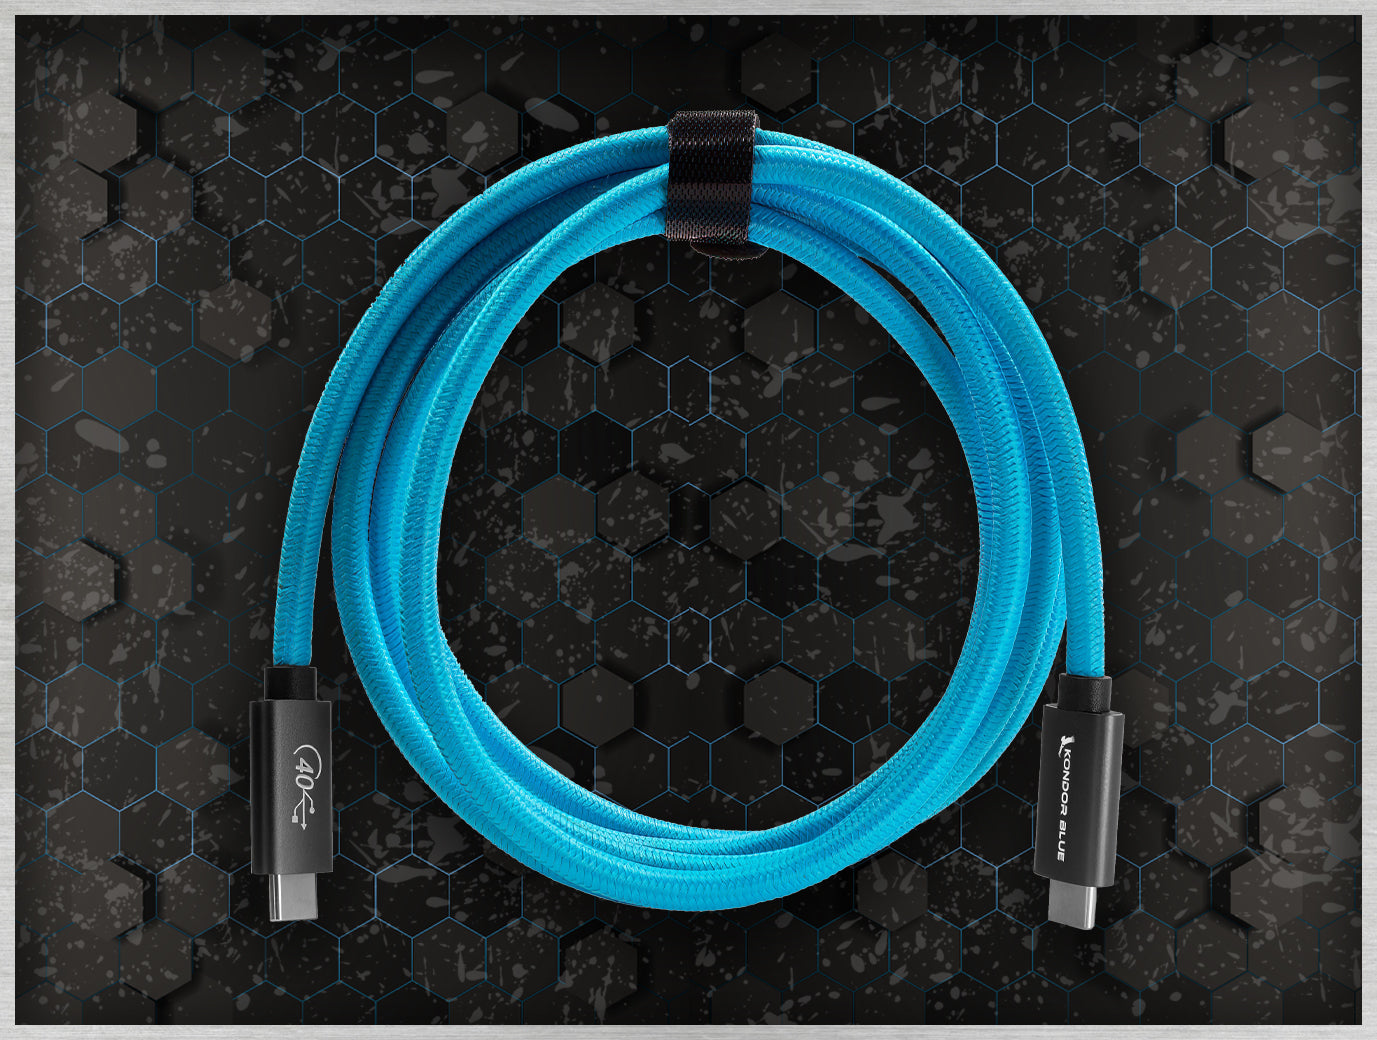 Kondor Blue Thunderbolt 4 USB-C Cable, 3ft - Kondor Blue